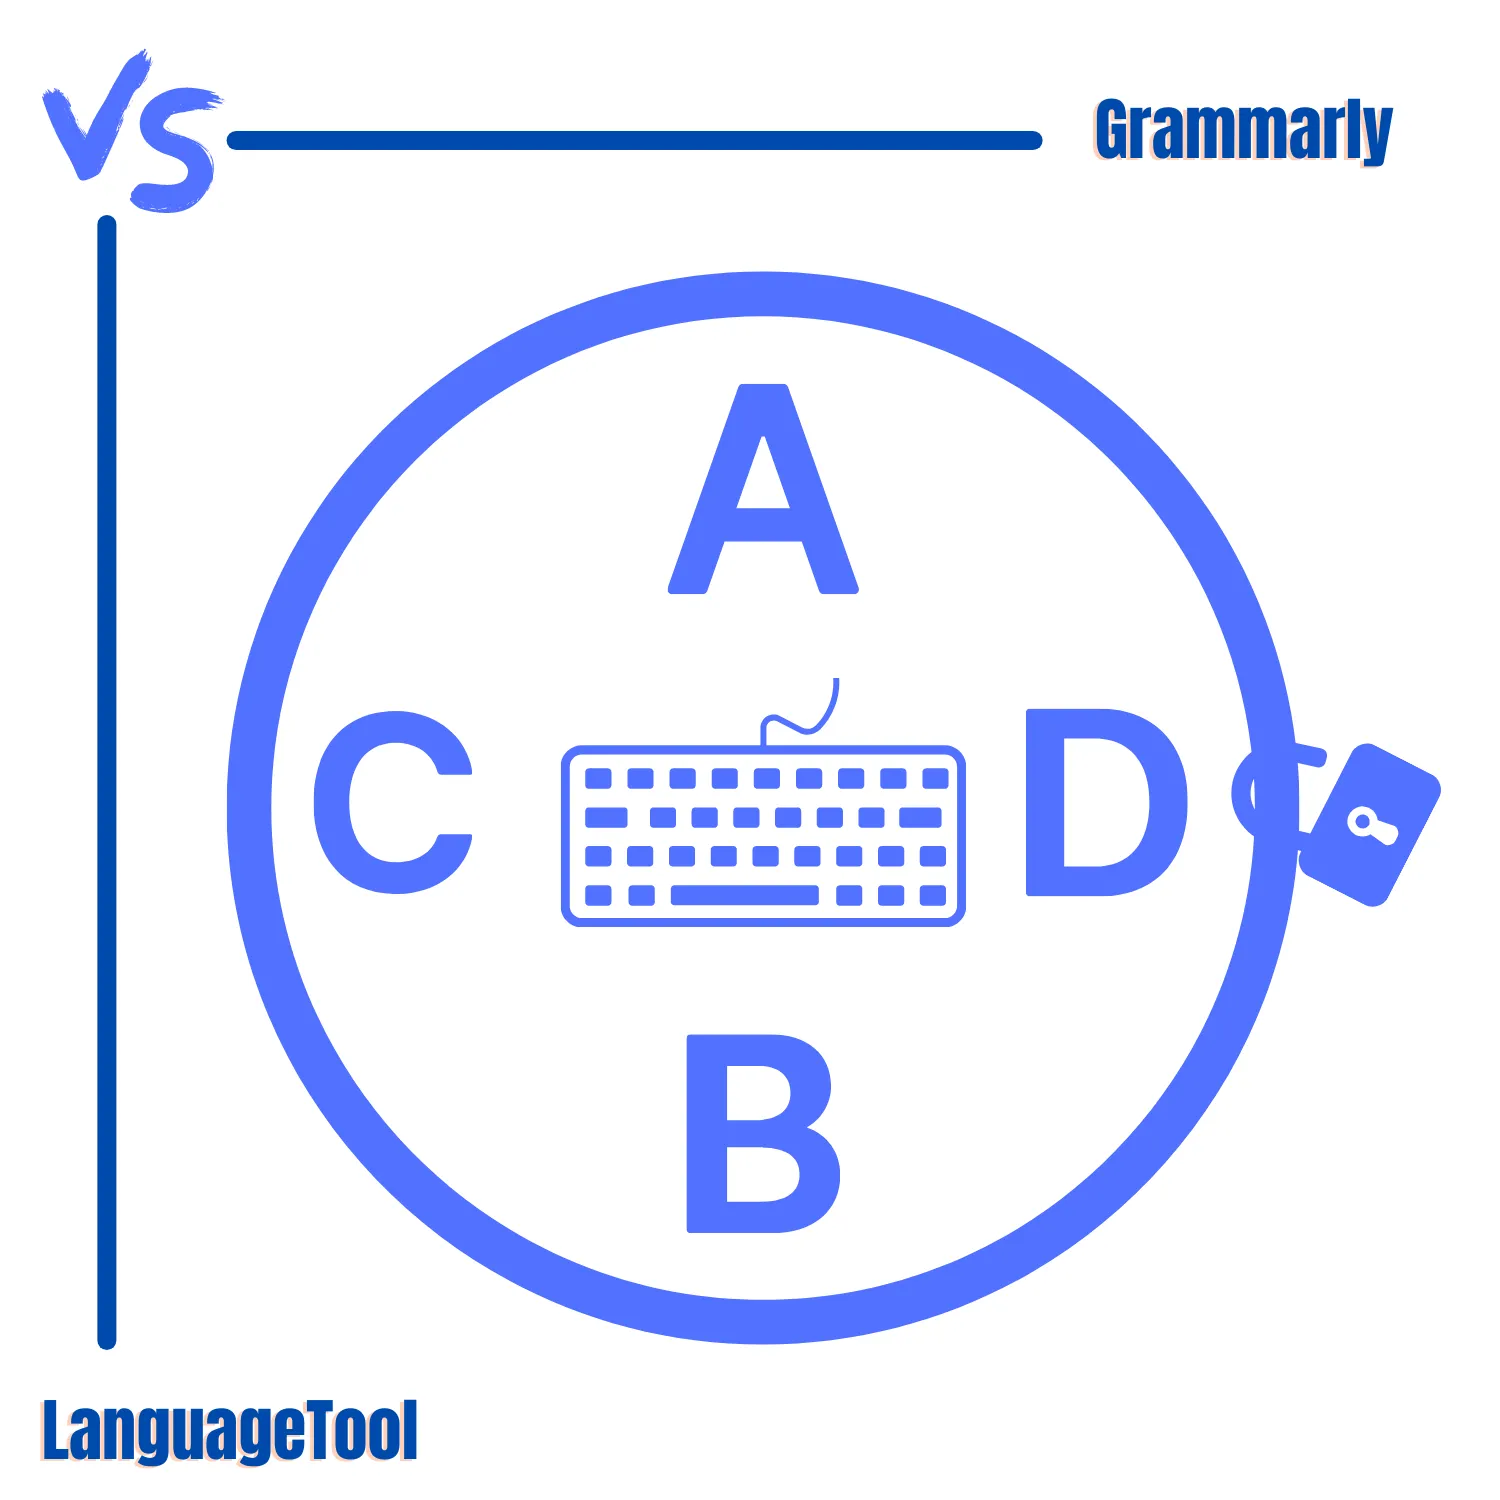 LanguageTool vs. Grammarly